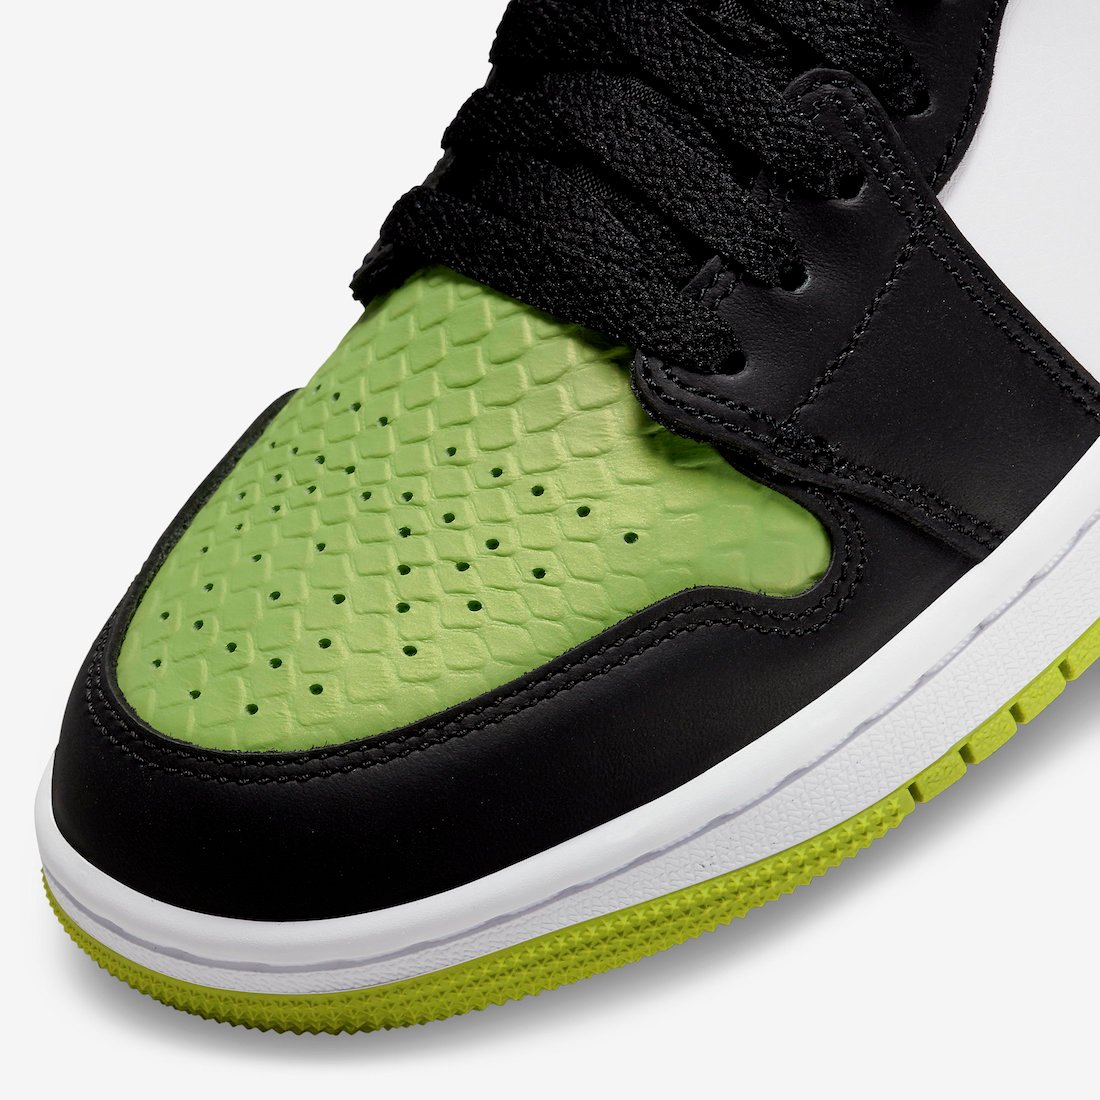 Air Jordan 1 Low Vivid Green Snakeskin DX4446-301 Release Date Info